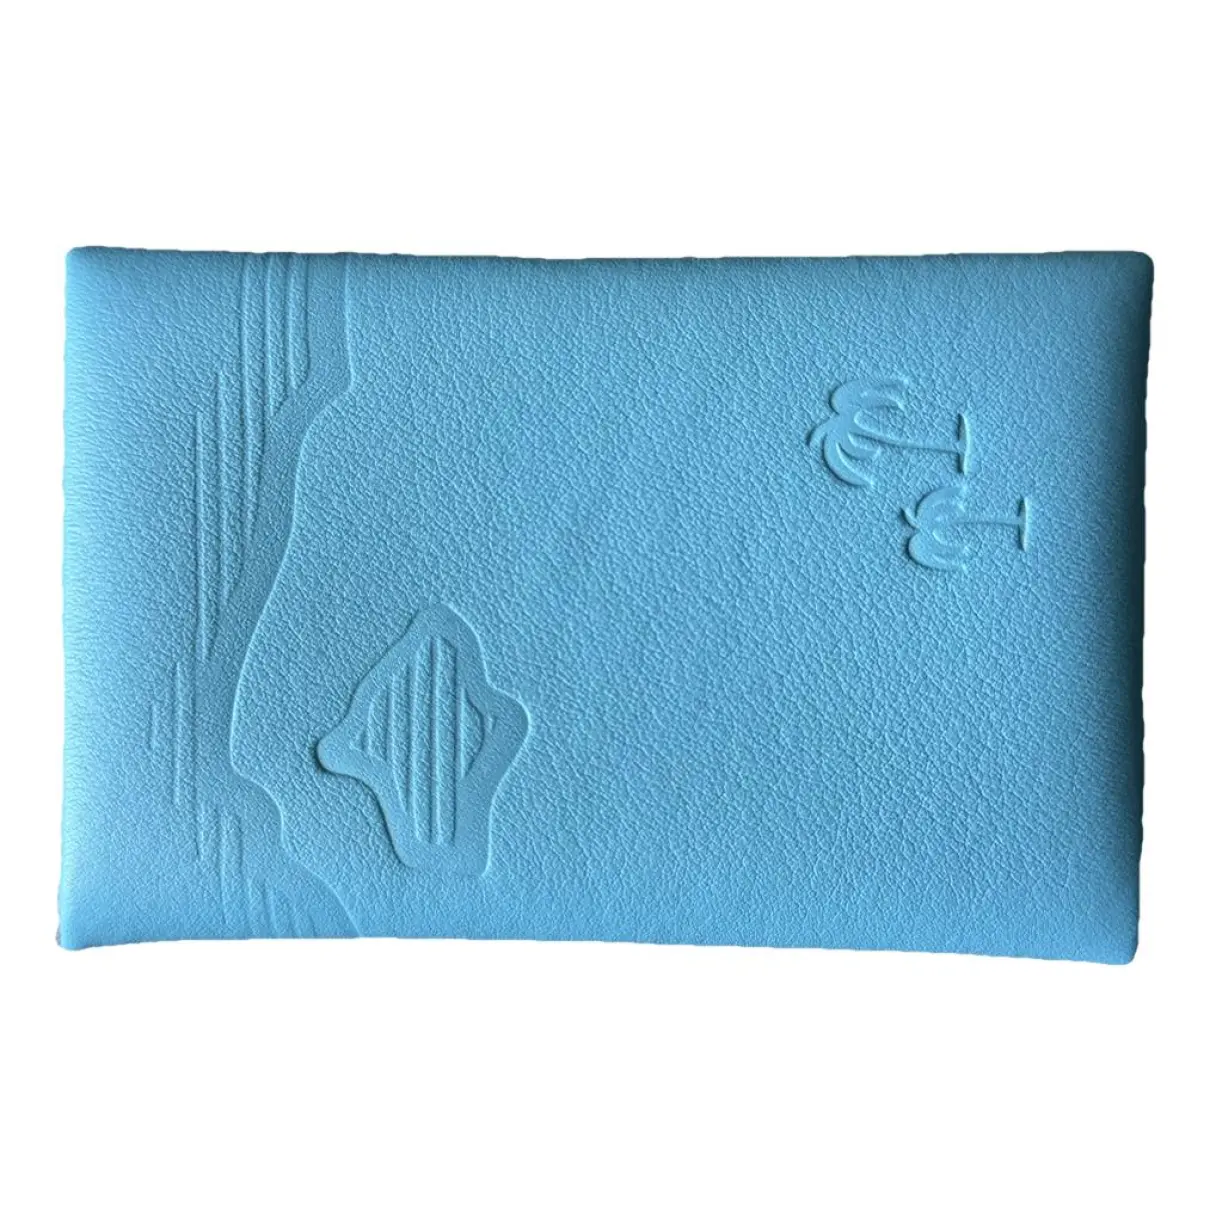 Calvi leather card wallet